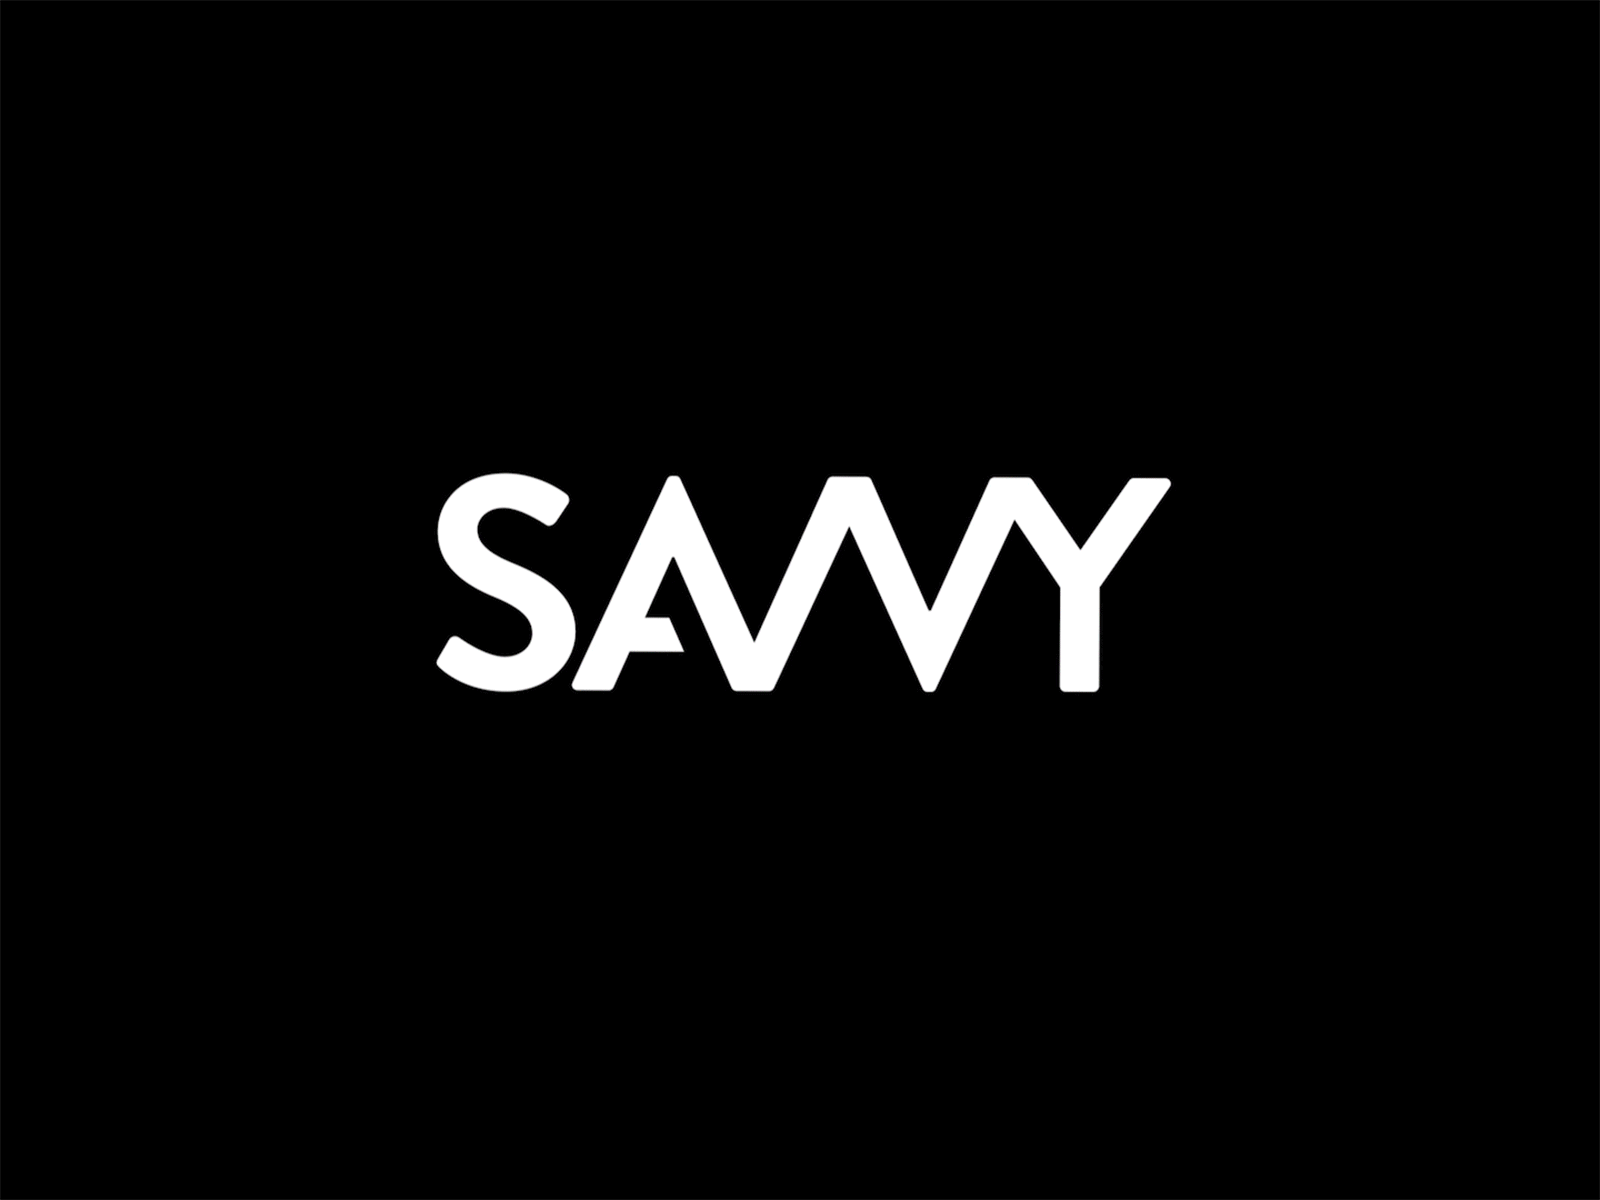 Savvy Logo in Motion